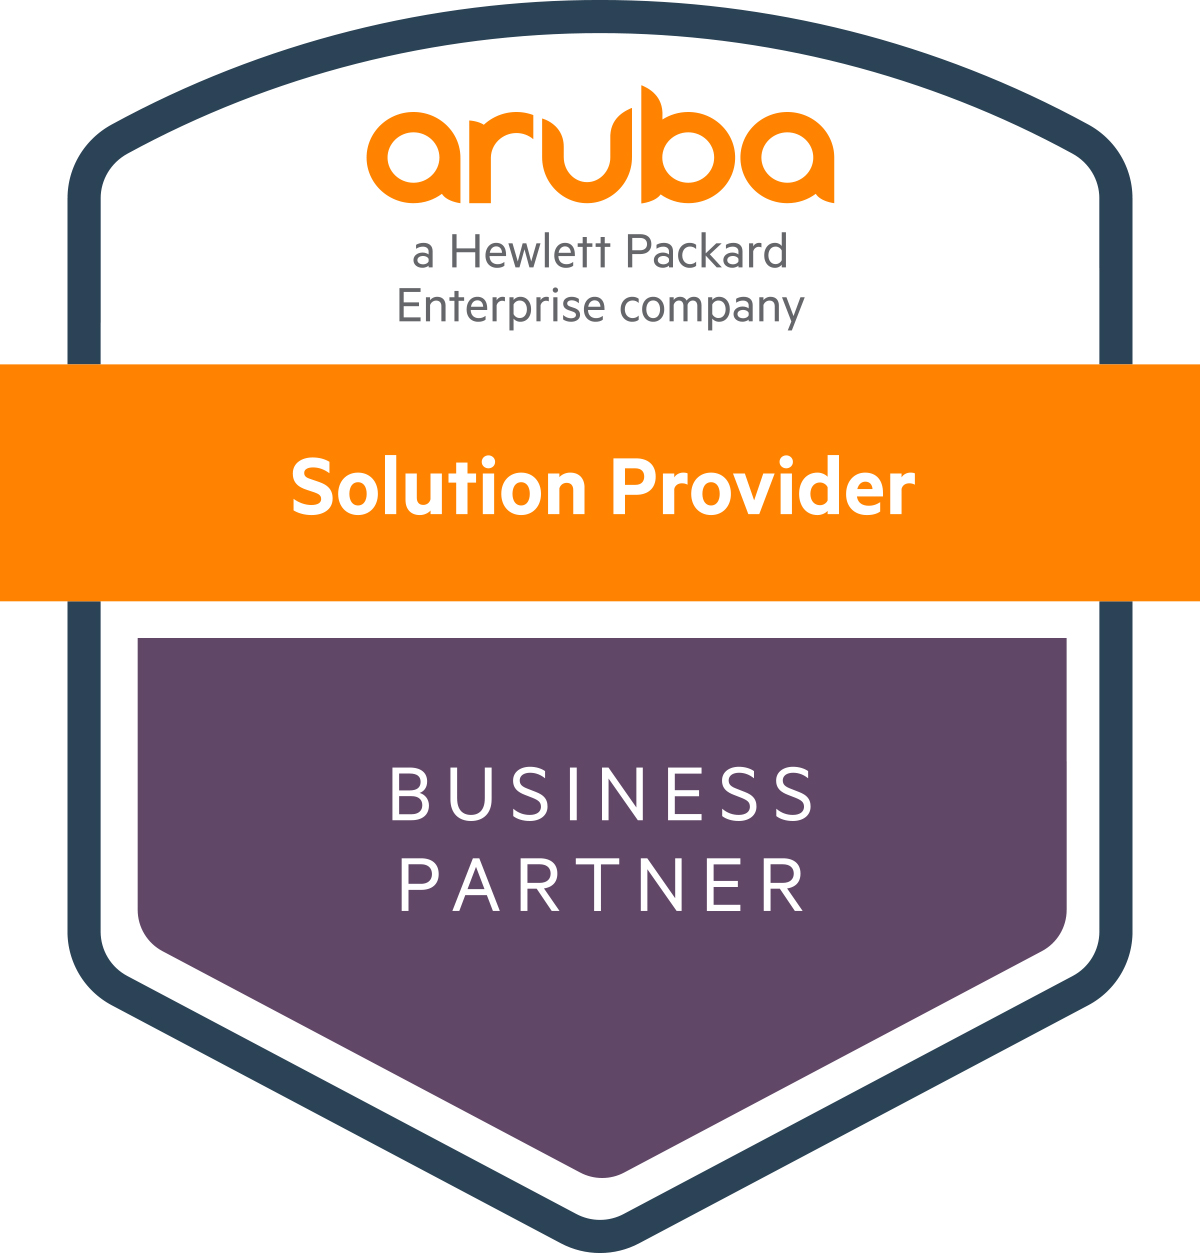 Aruba Partner